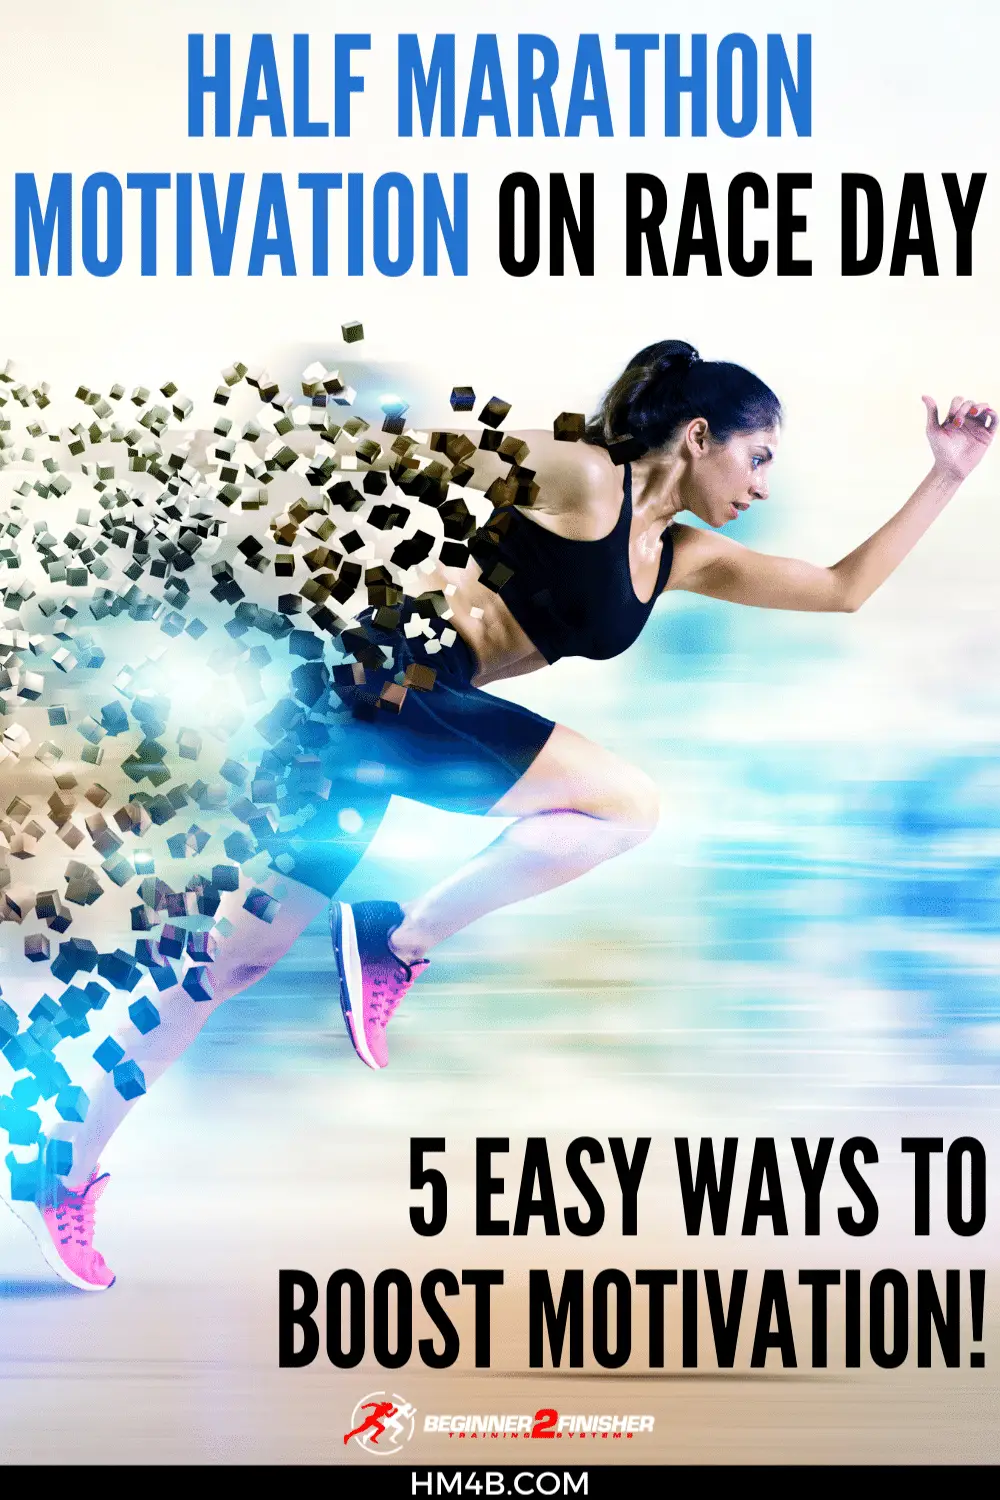 Half Marathon Motivation on Race Day - 5 easy ways to boost Motivation!